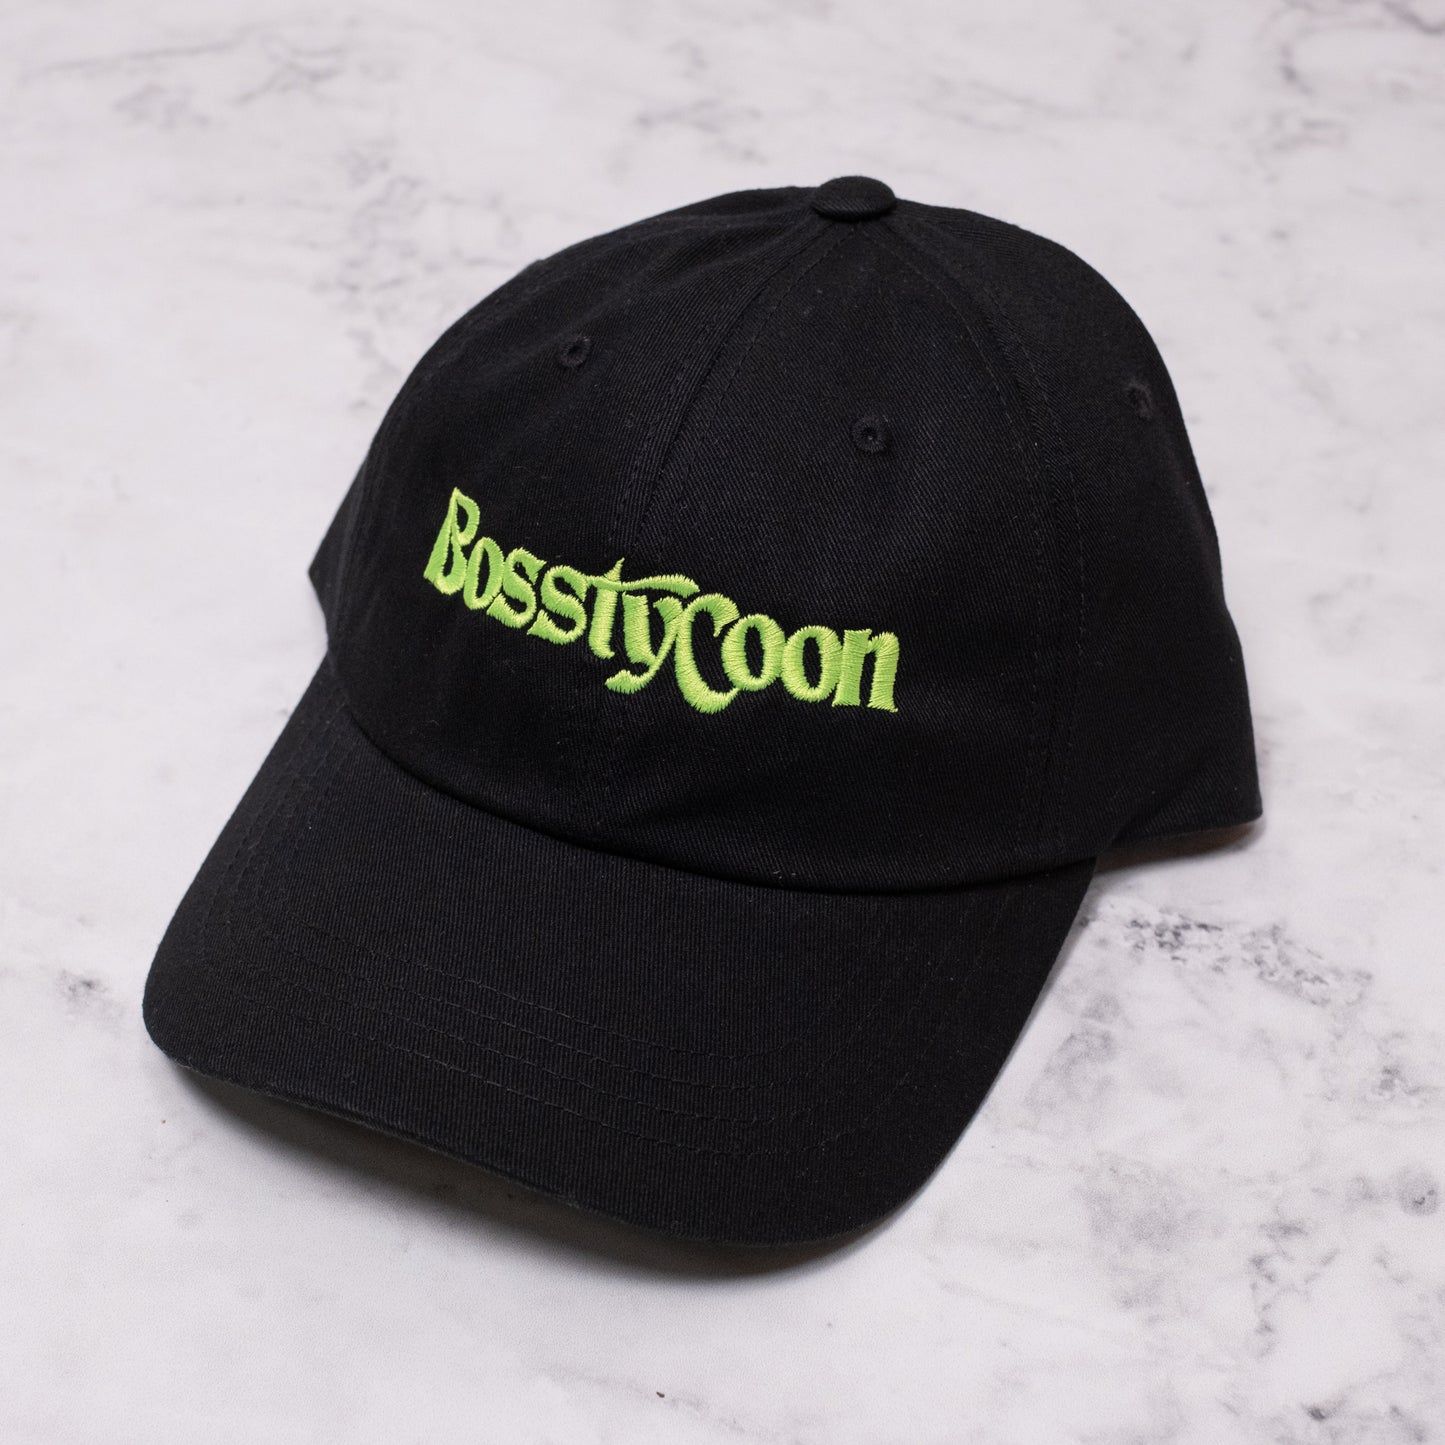 Bosstycoon Dad Hat